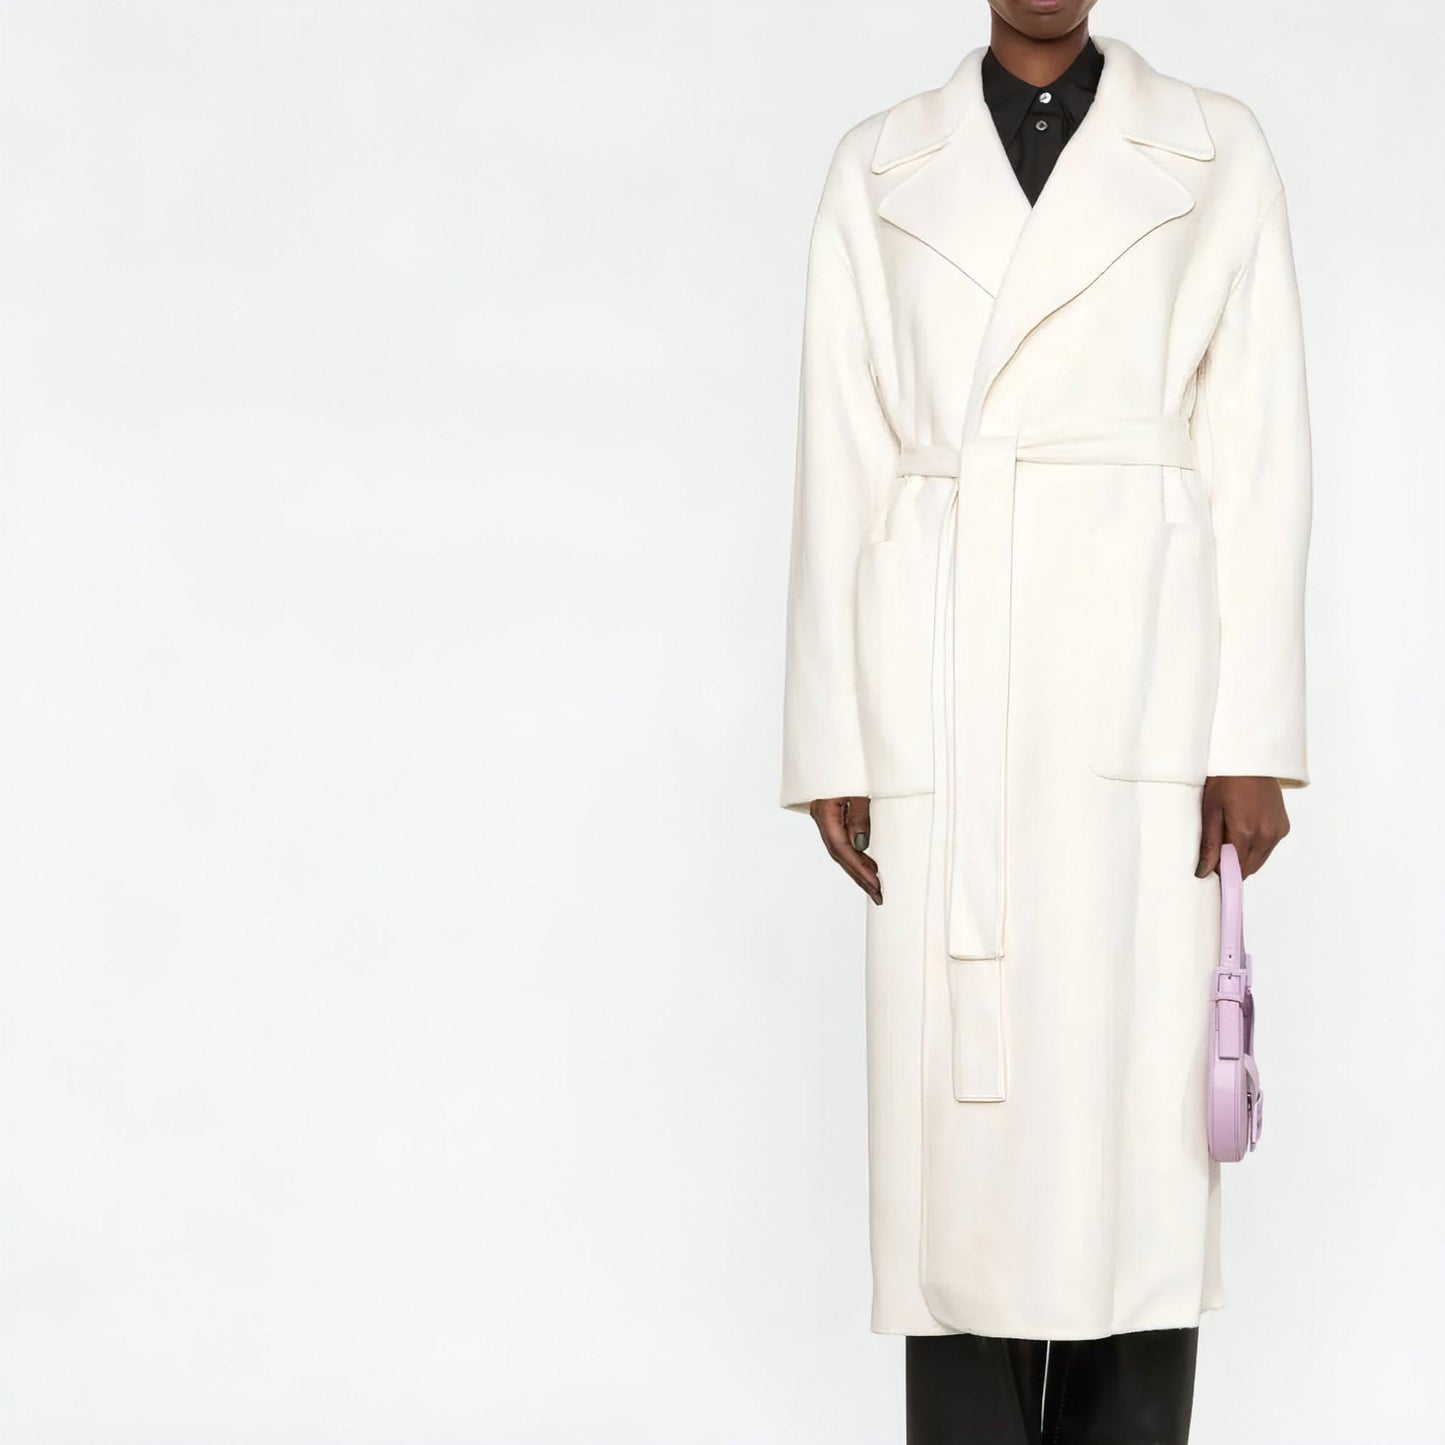 MICHAEL KORS moteriškas baltas paltas